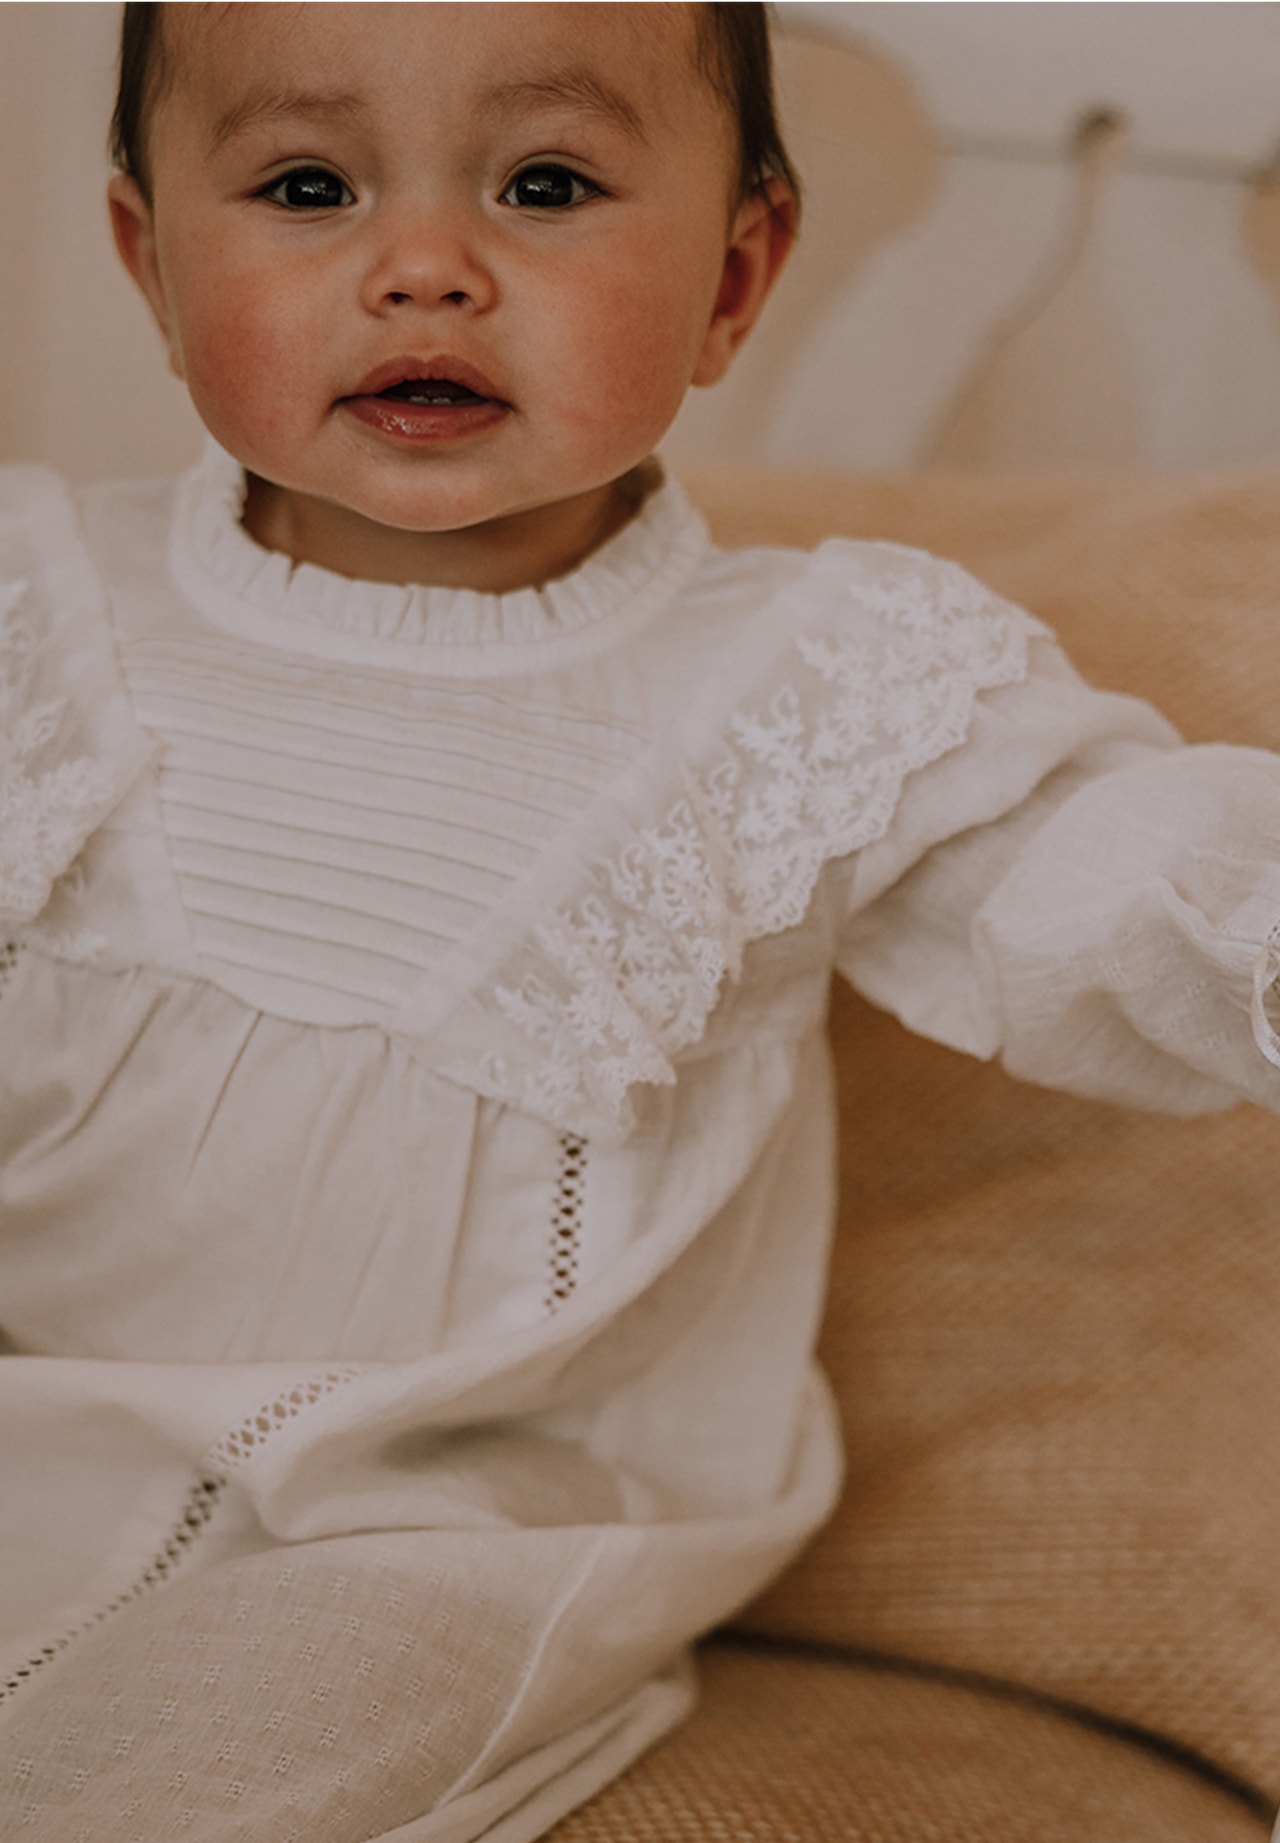 MAMA.LICIOUS Baby-kjole -White - 00651121